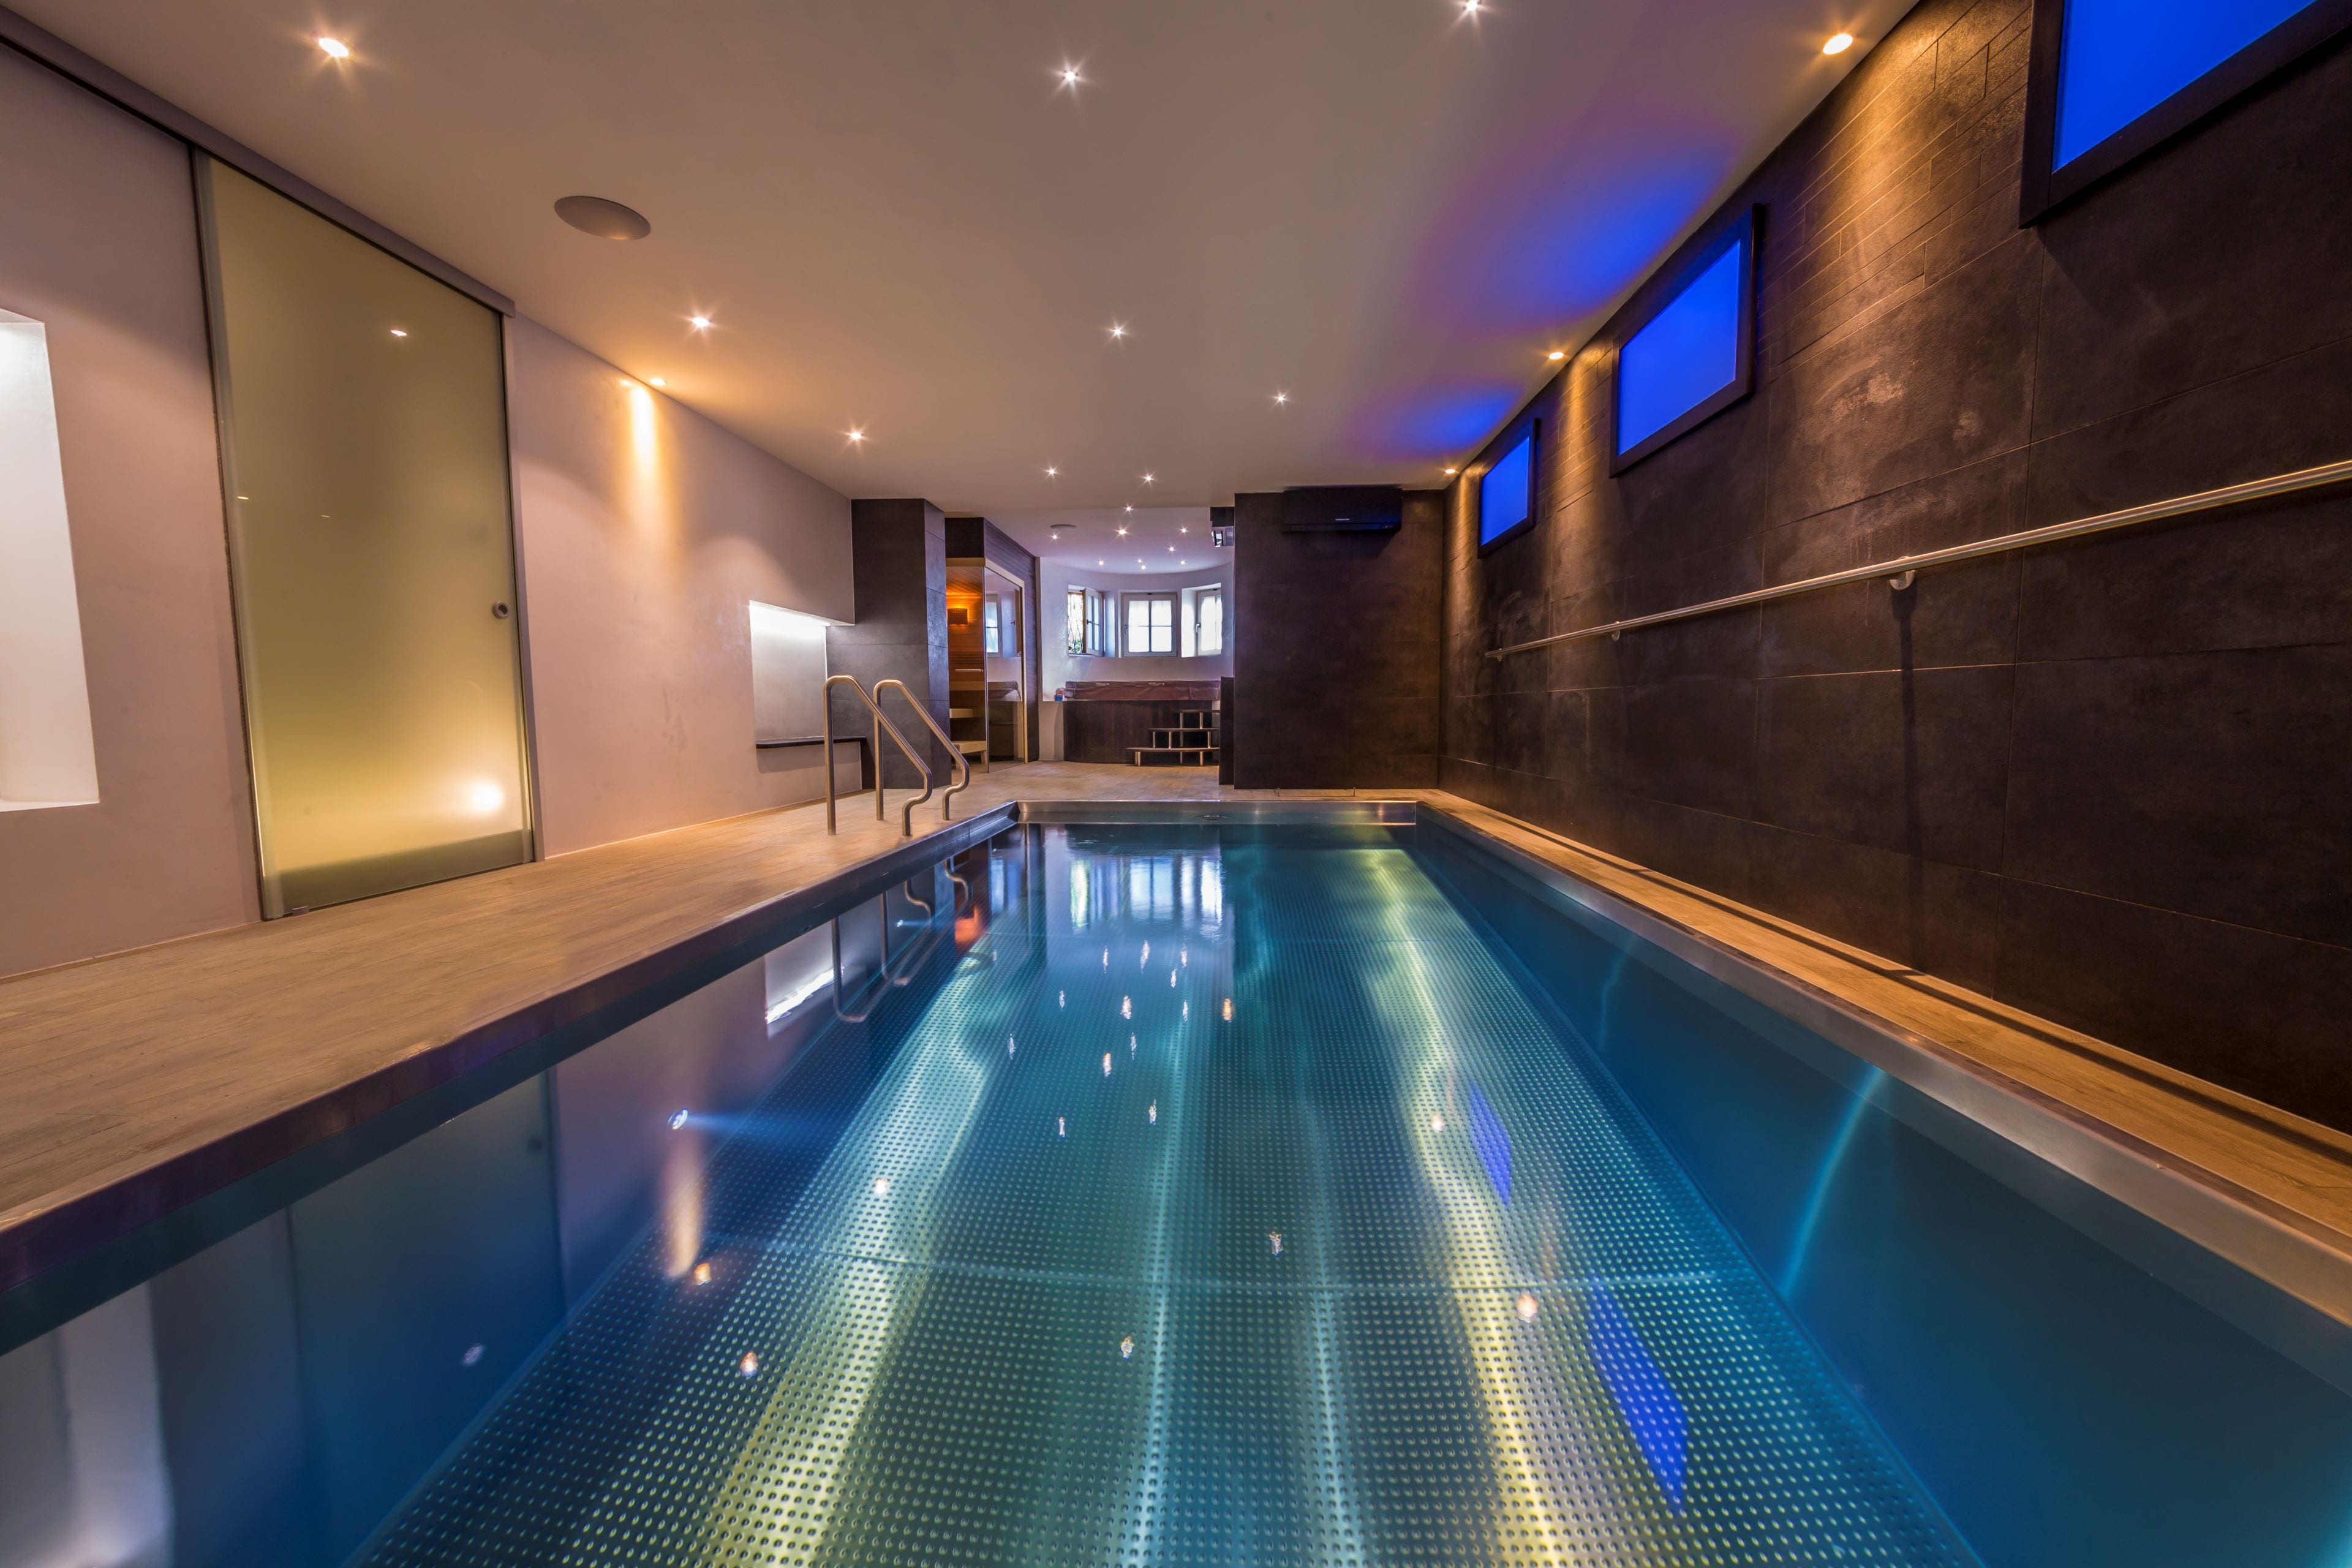 Pool Installation – IMAGINOX Interior Stainless-Steel Pool